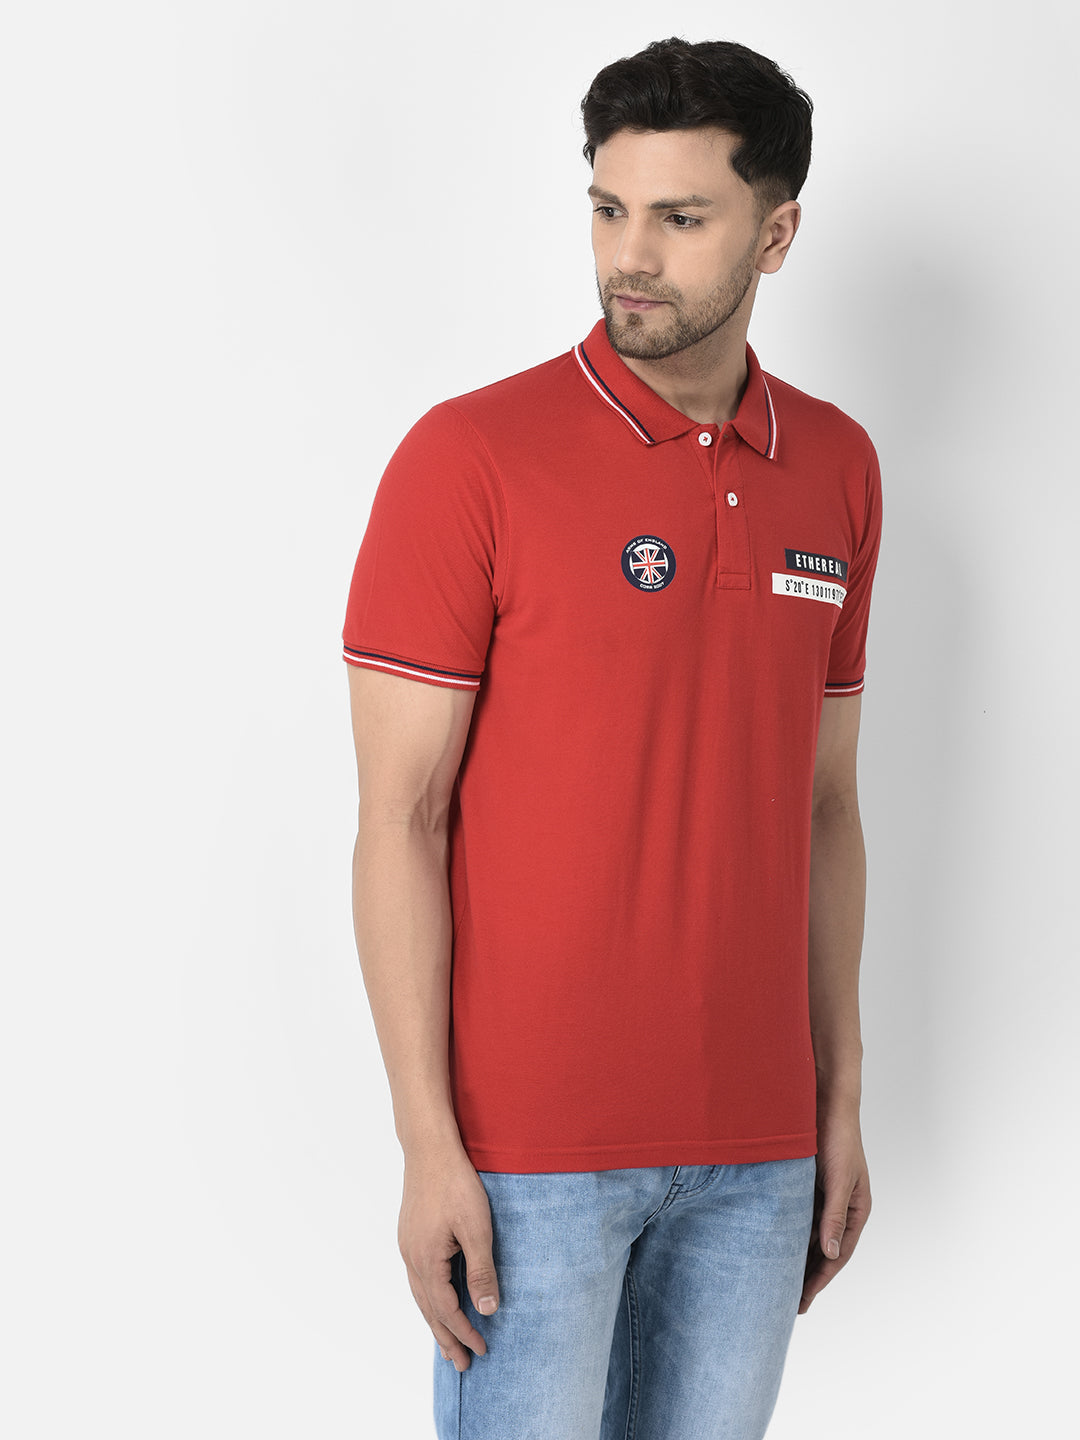 Cobb Red Solid Regular Fit T-Shirt